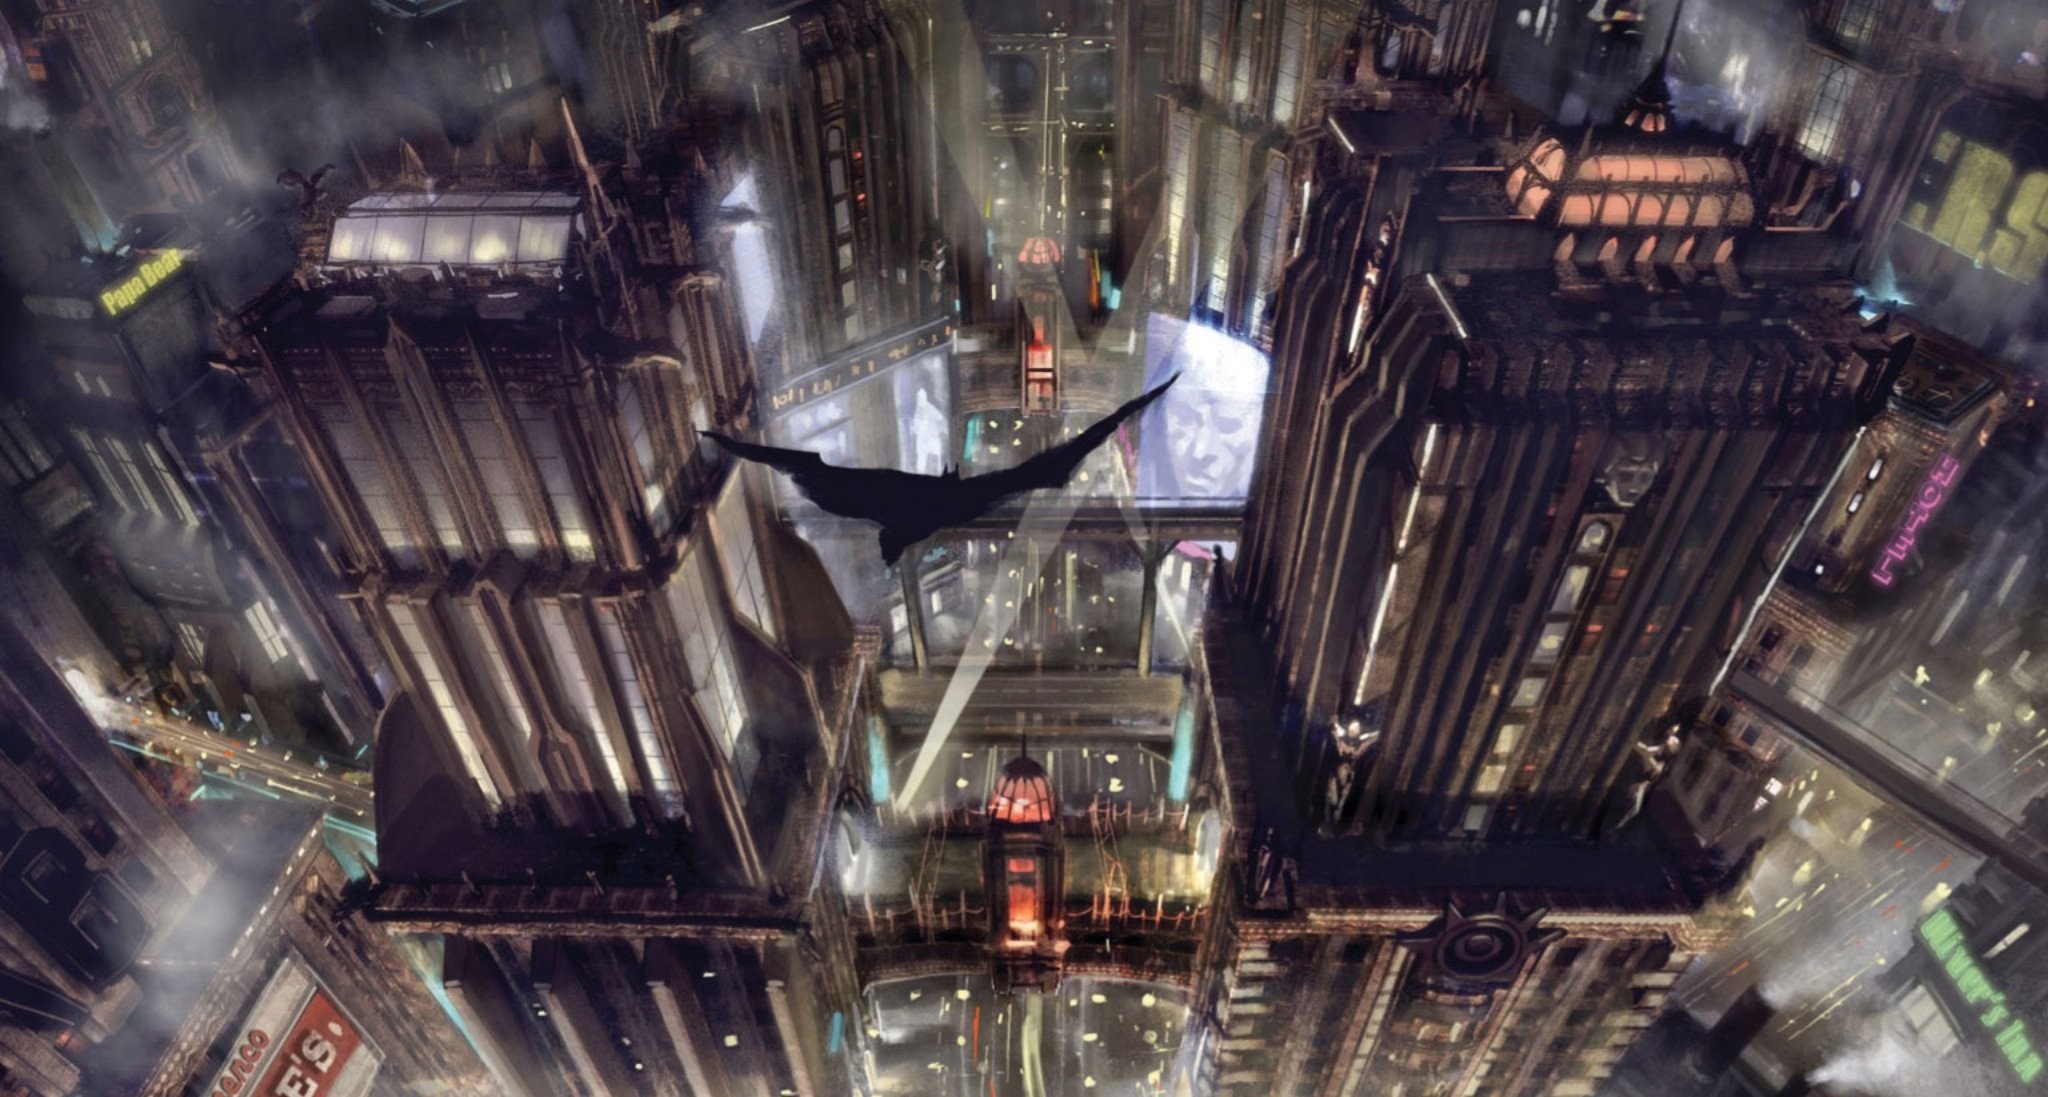 General 2048x1097 Batman: Arkham Knight Rocksteady Studios Batman Gotham City video games 2015 (Year) video game art concept art PC gaming